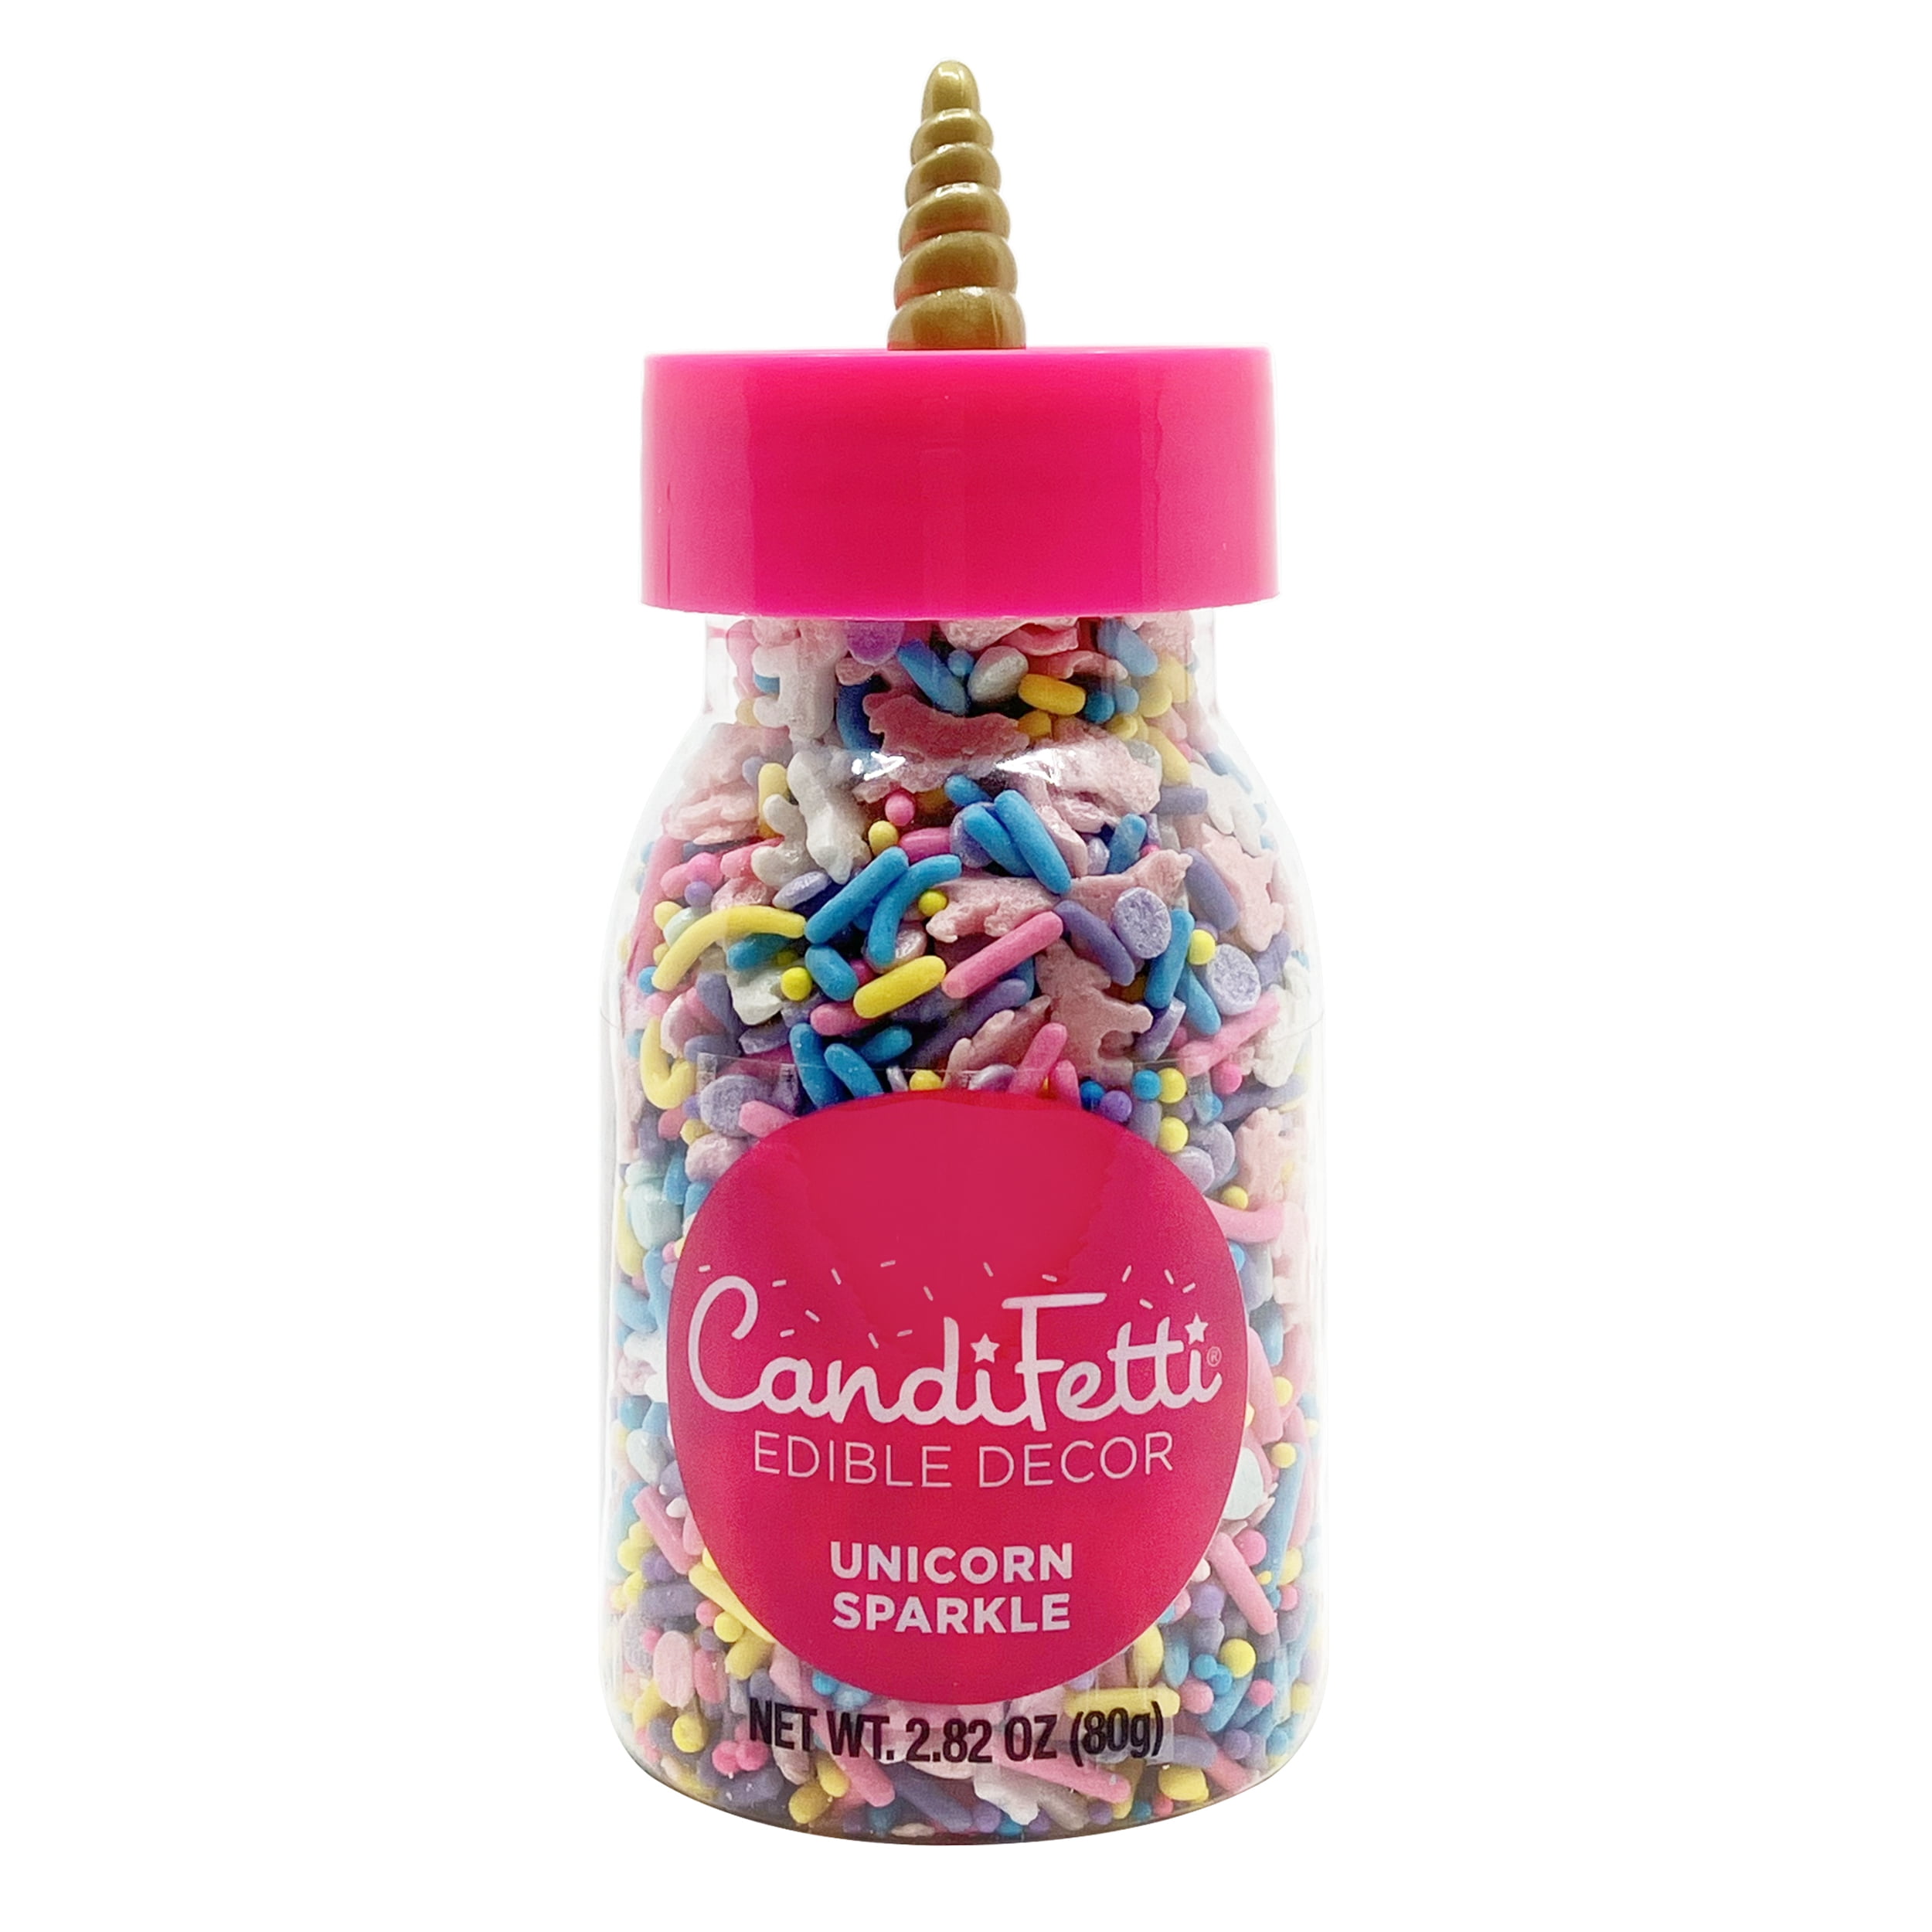 CU/PU - Stylin' #304 - Glitter Sprinkles